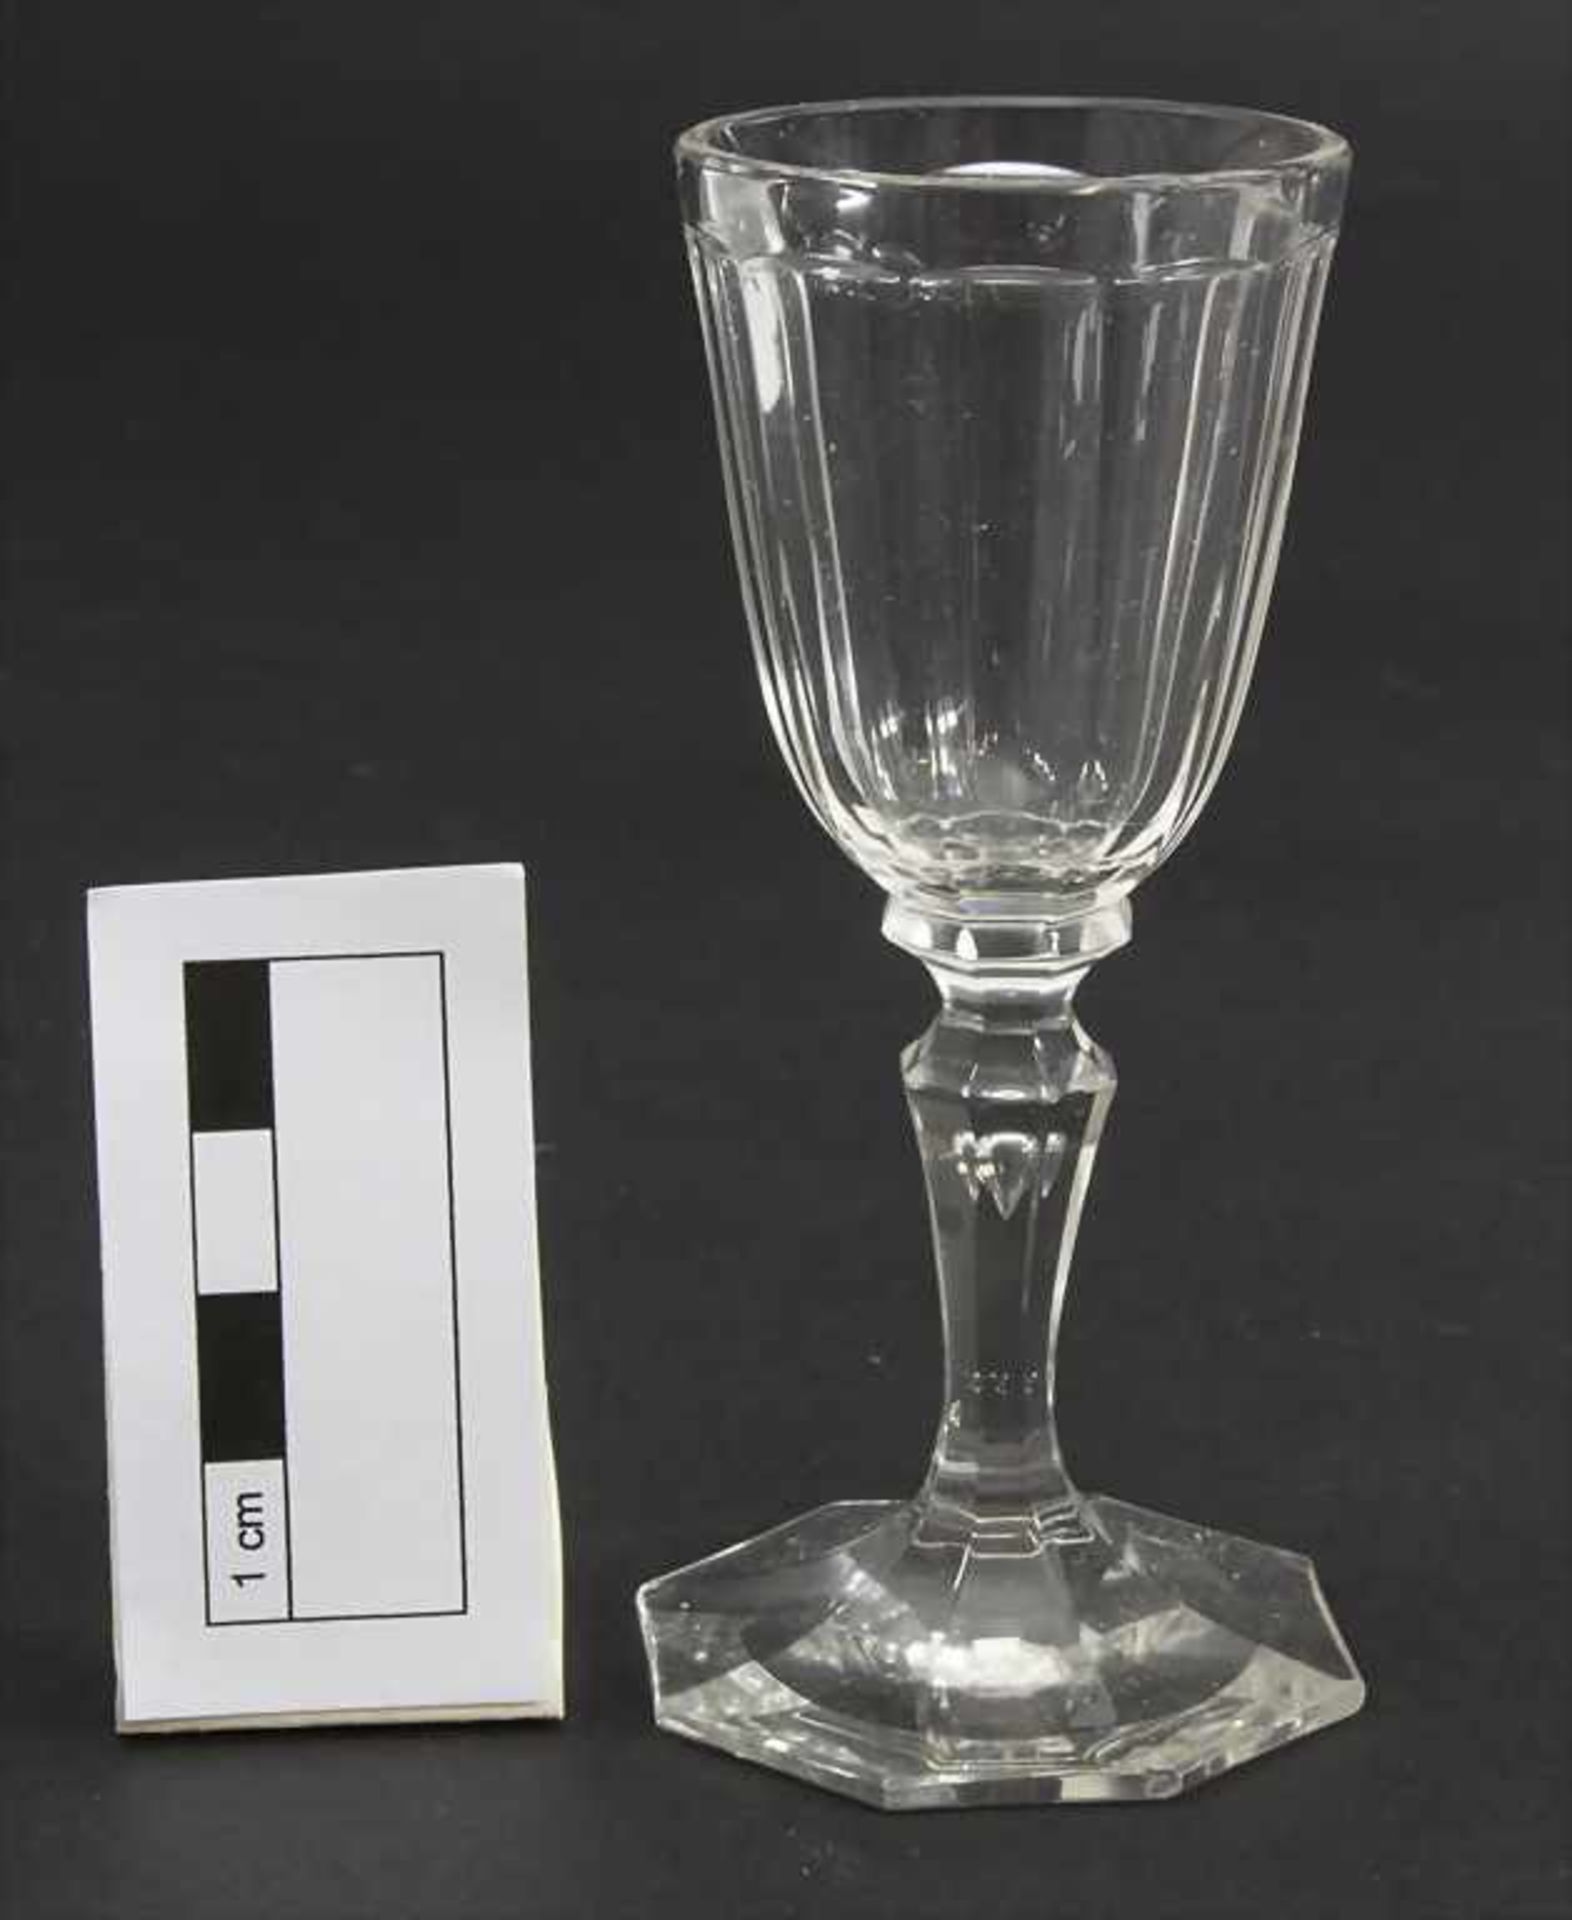 6 Schnapsgläser / 6 shot glasses, J. & L. Lobmeyr, Wien, um 1900 - Image 2 of 3